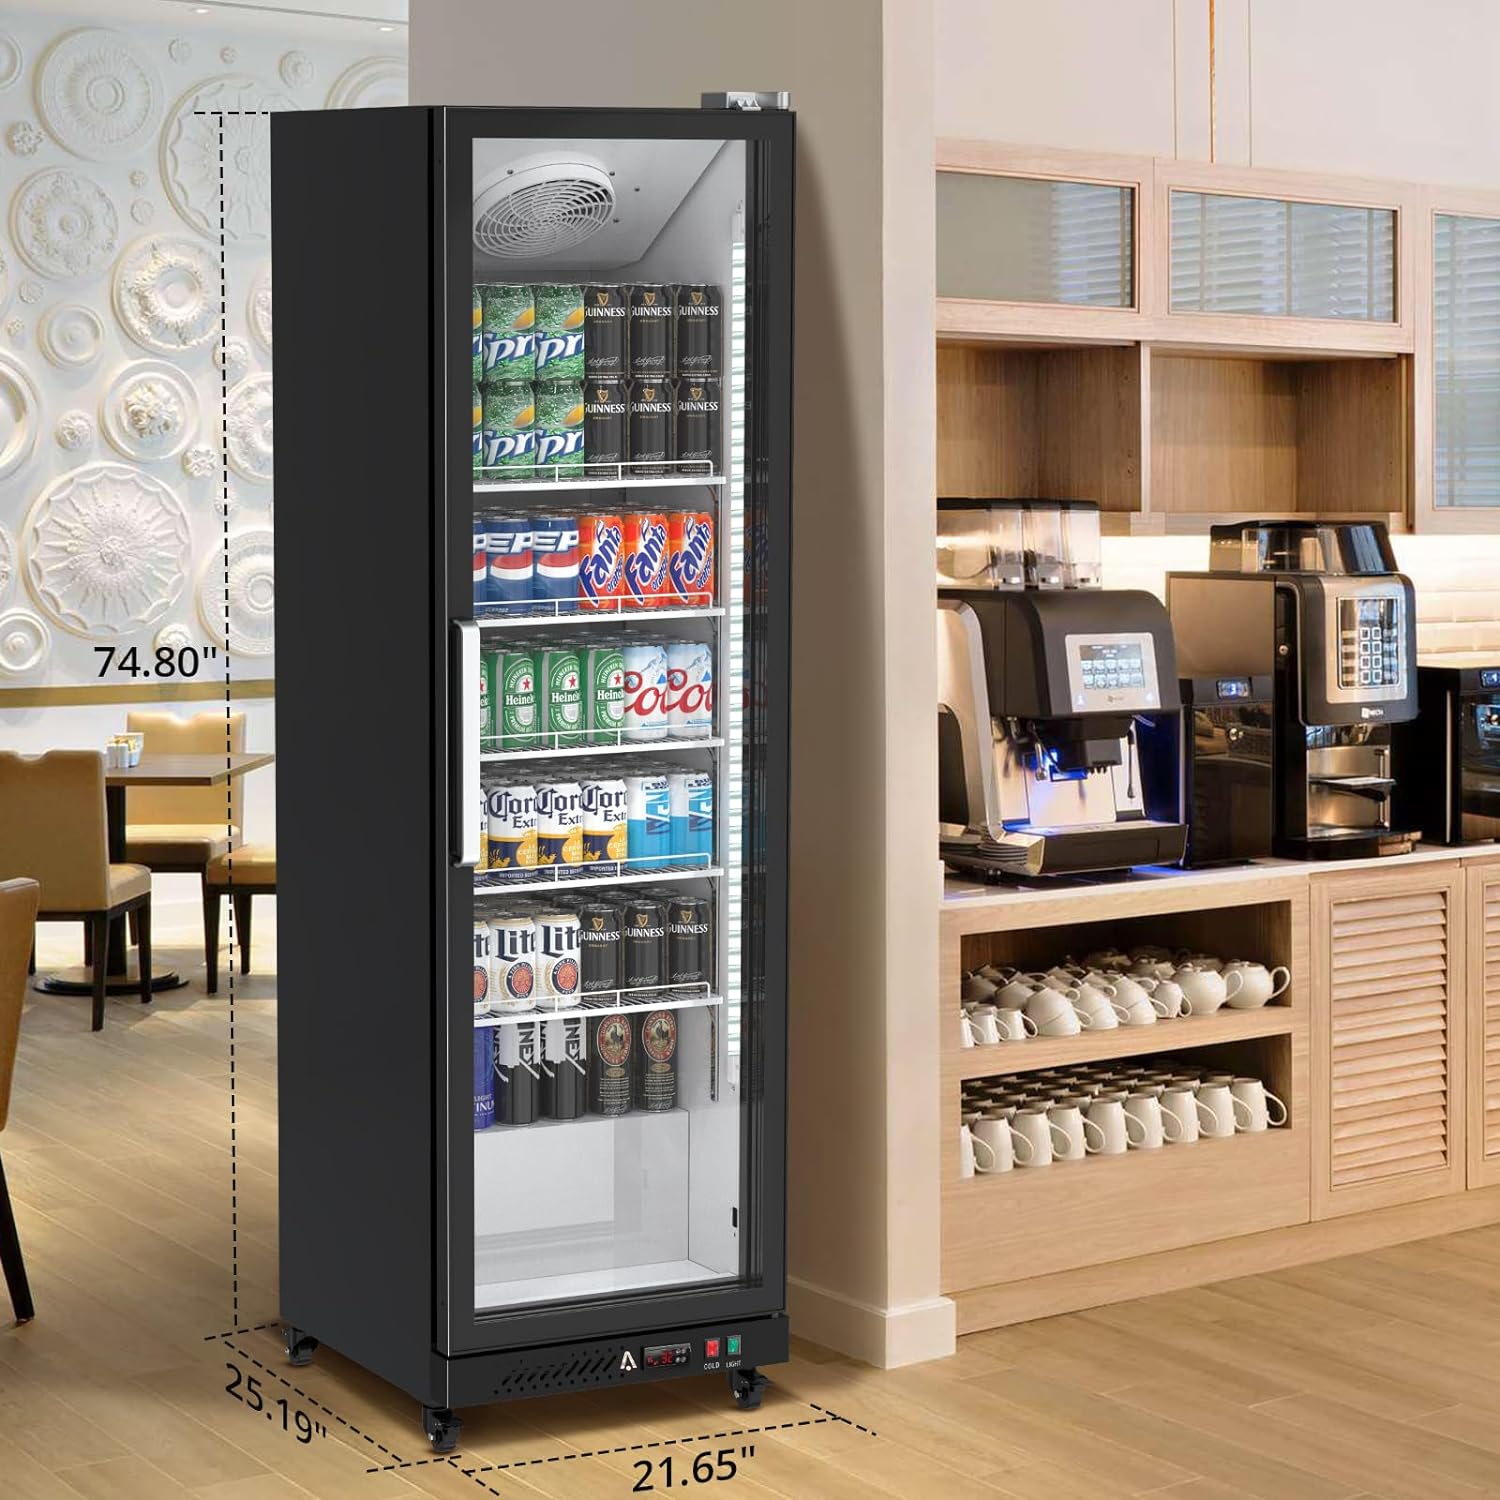 Commercial Refrigerator, Display Fridge Merchandiser Upright Beverage Cooler, Single Glass Door Fridge with Adjustable Shelves & Drink Organizers, 12.4 Cu. Ft. Black